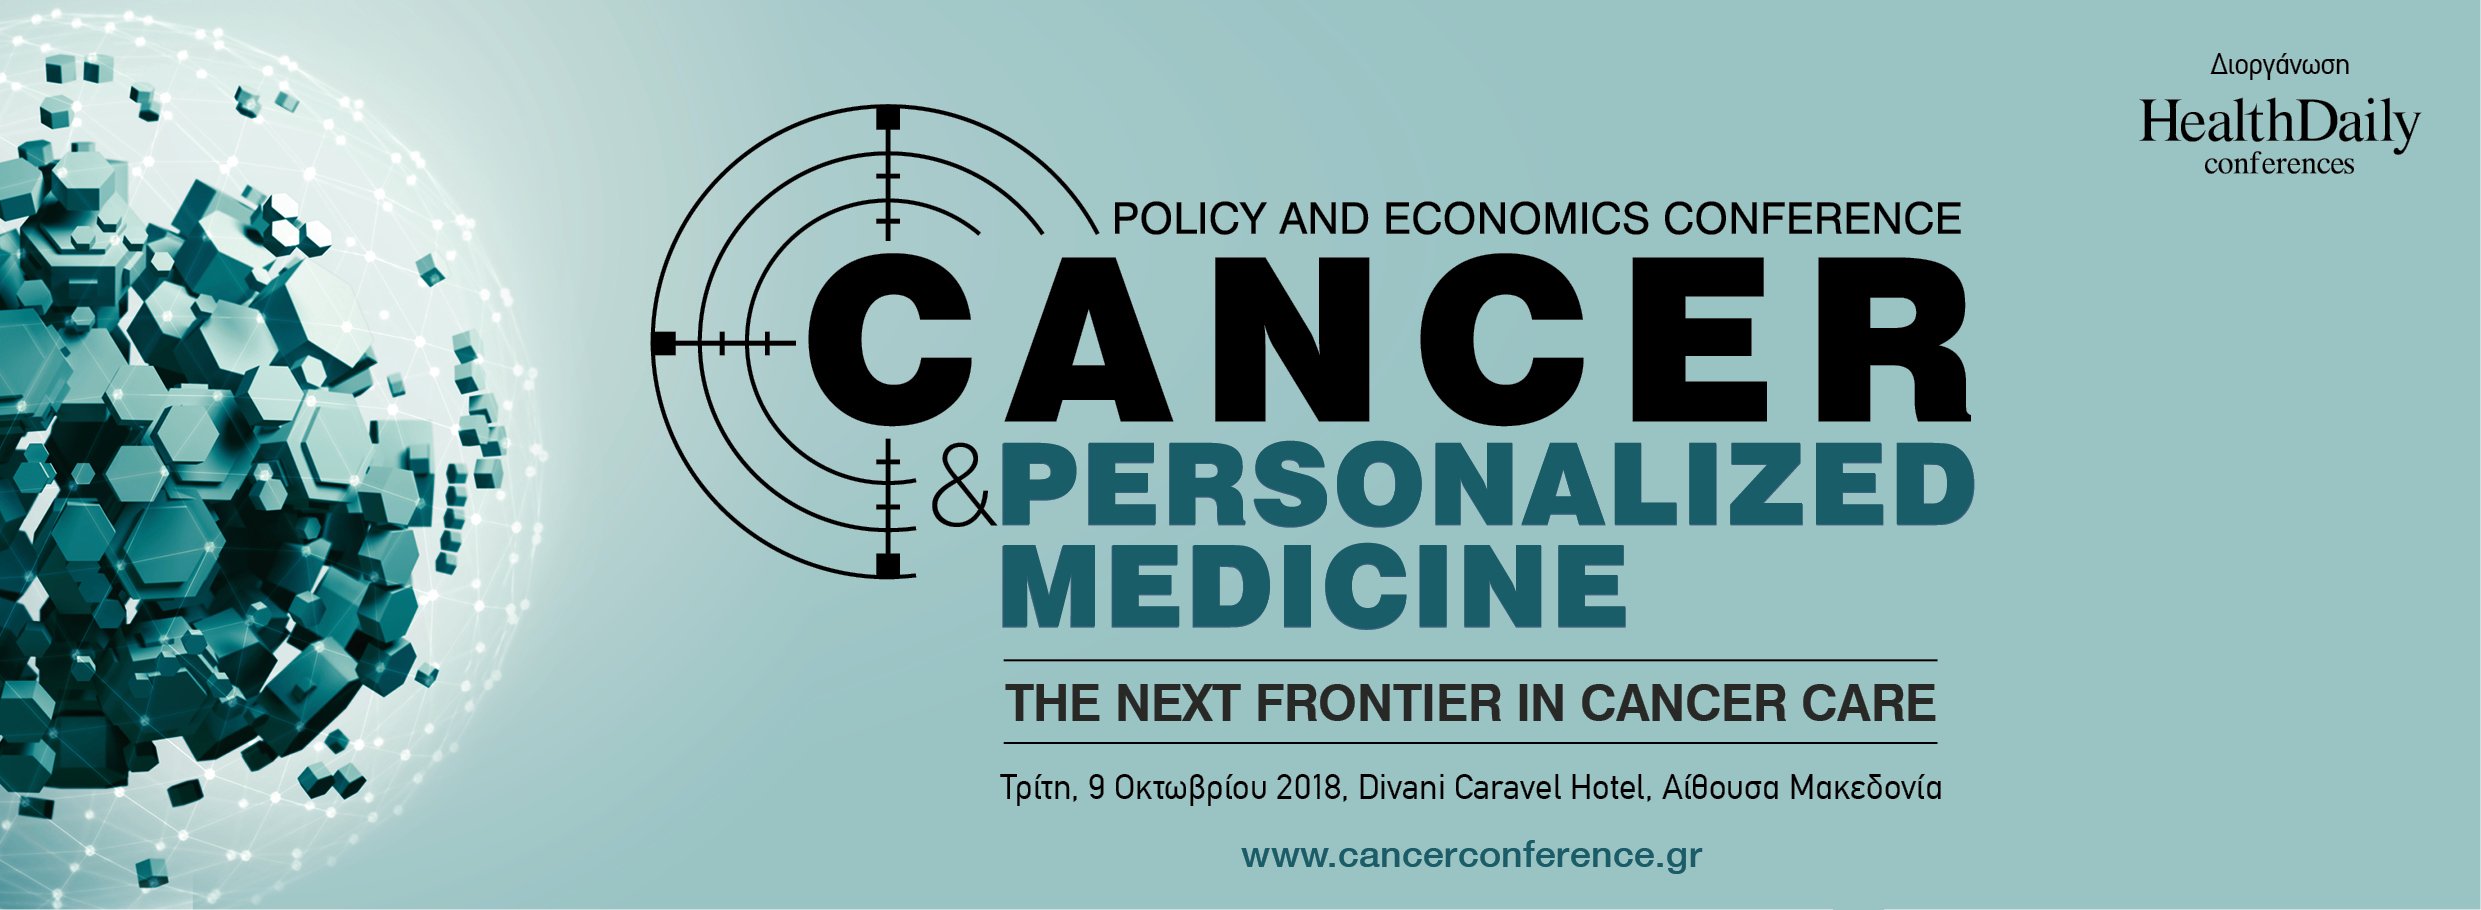 Cancer & Personalized Medicine Conference 2018: Εξερευνώντας νέους ορίζοντες στη θεραπεία του καρκίνου